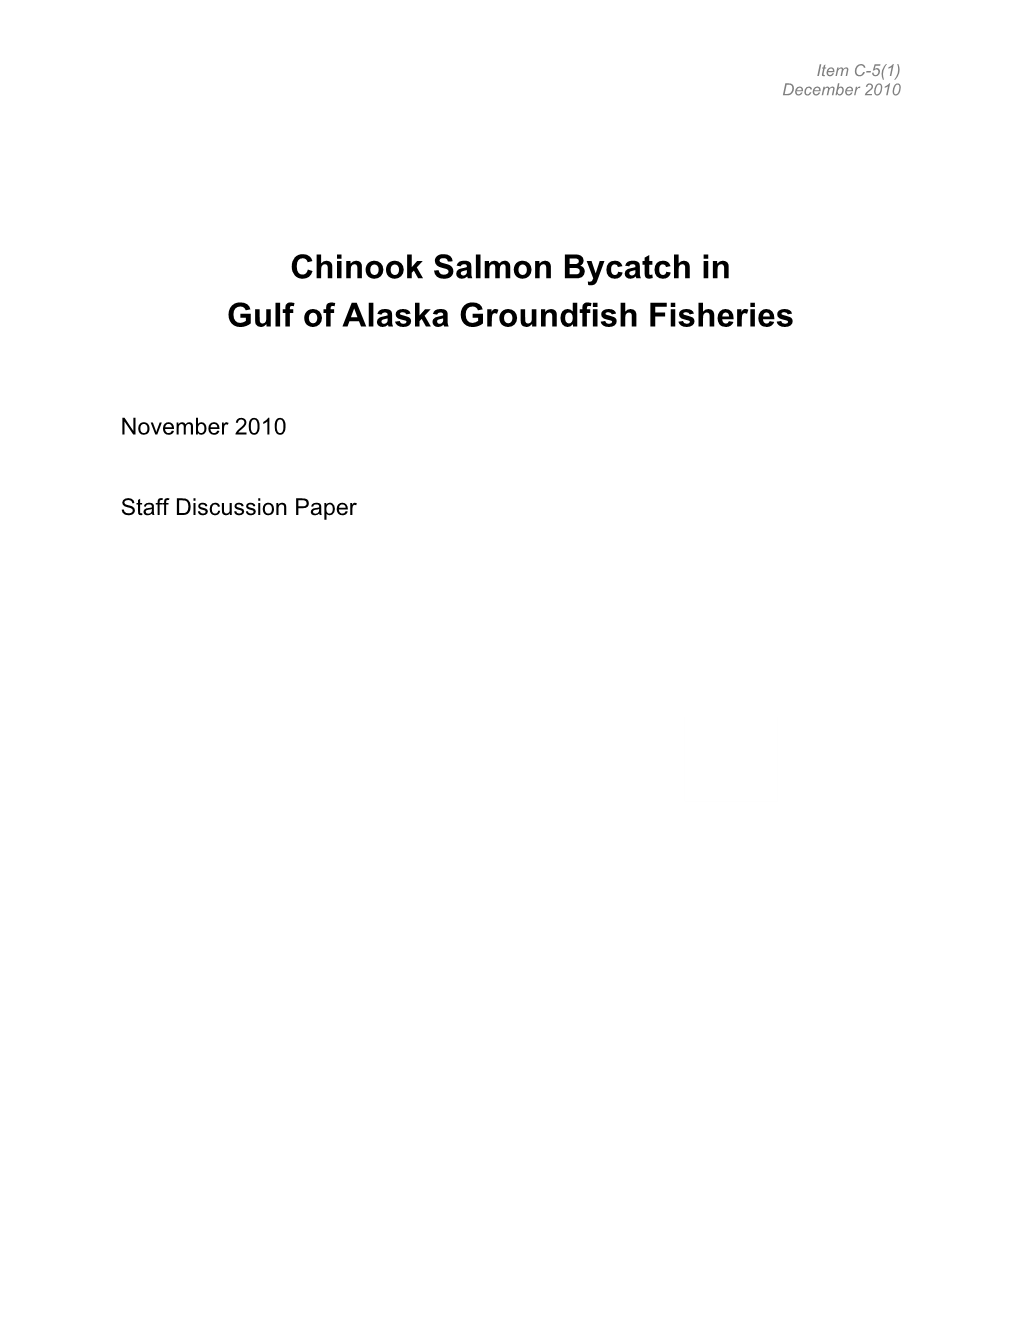 Chinook Salmon Bycatch in Gulf of Alaska Groundfish Fisheries